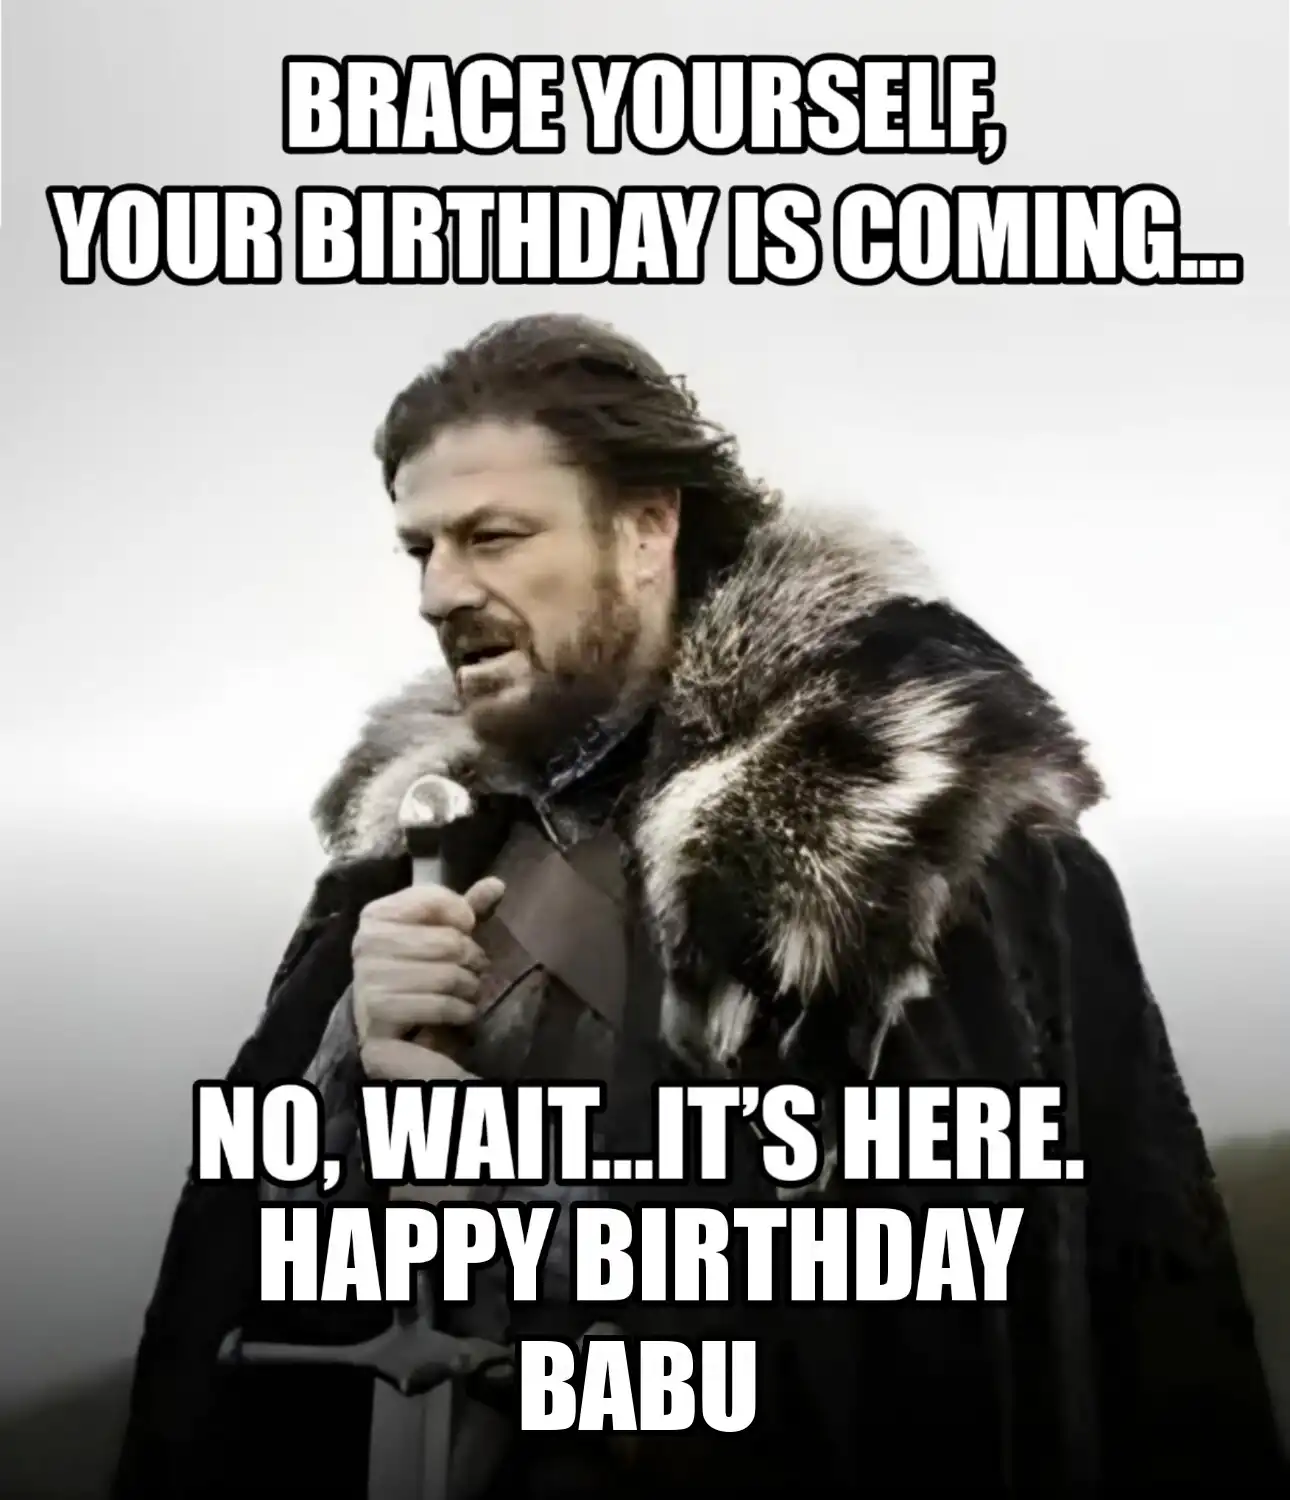 Happy Birthday Babu Brace Yourself Your Birthday Is Coming Meme